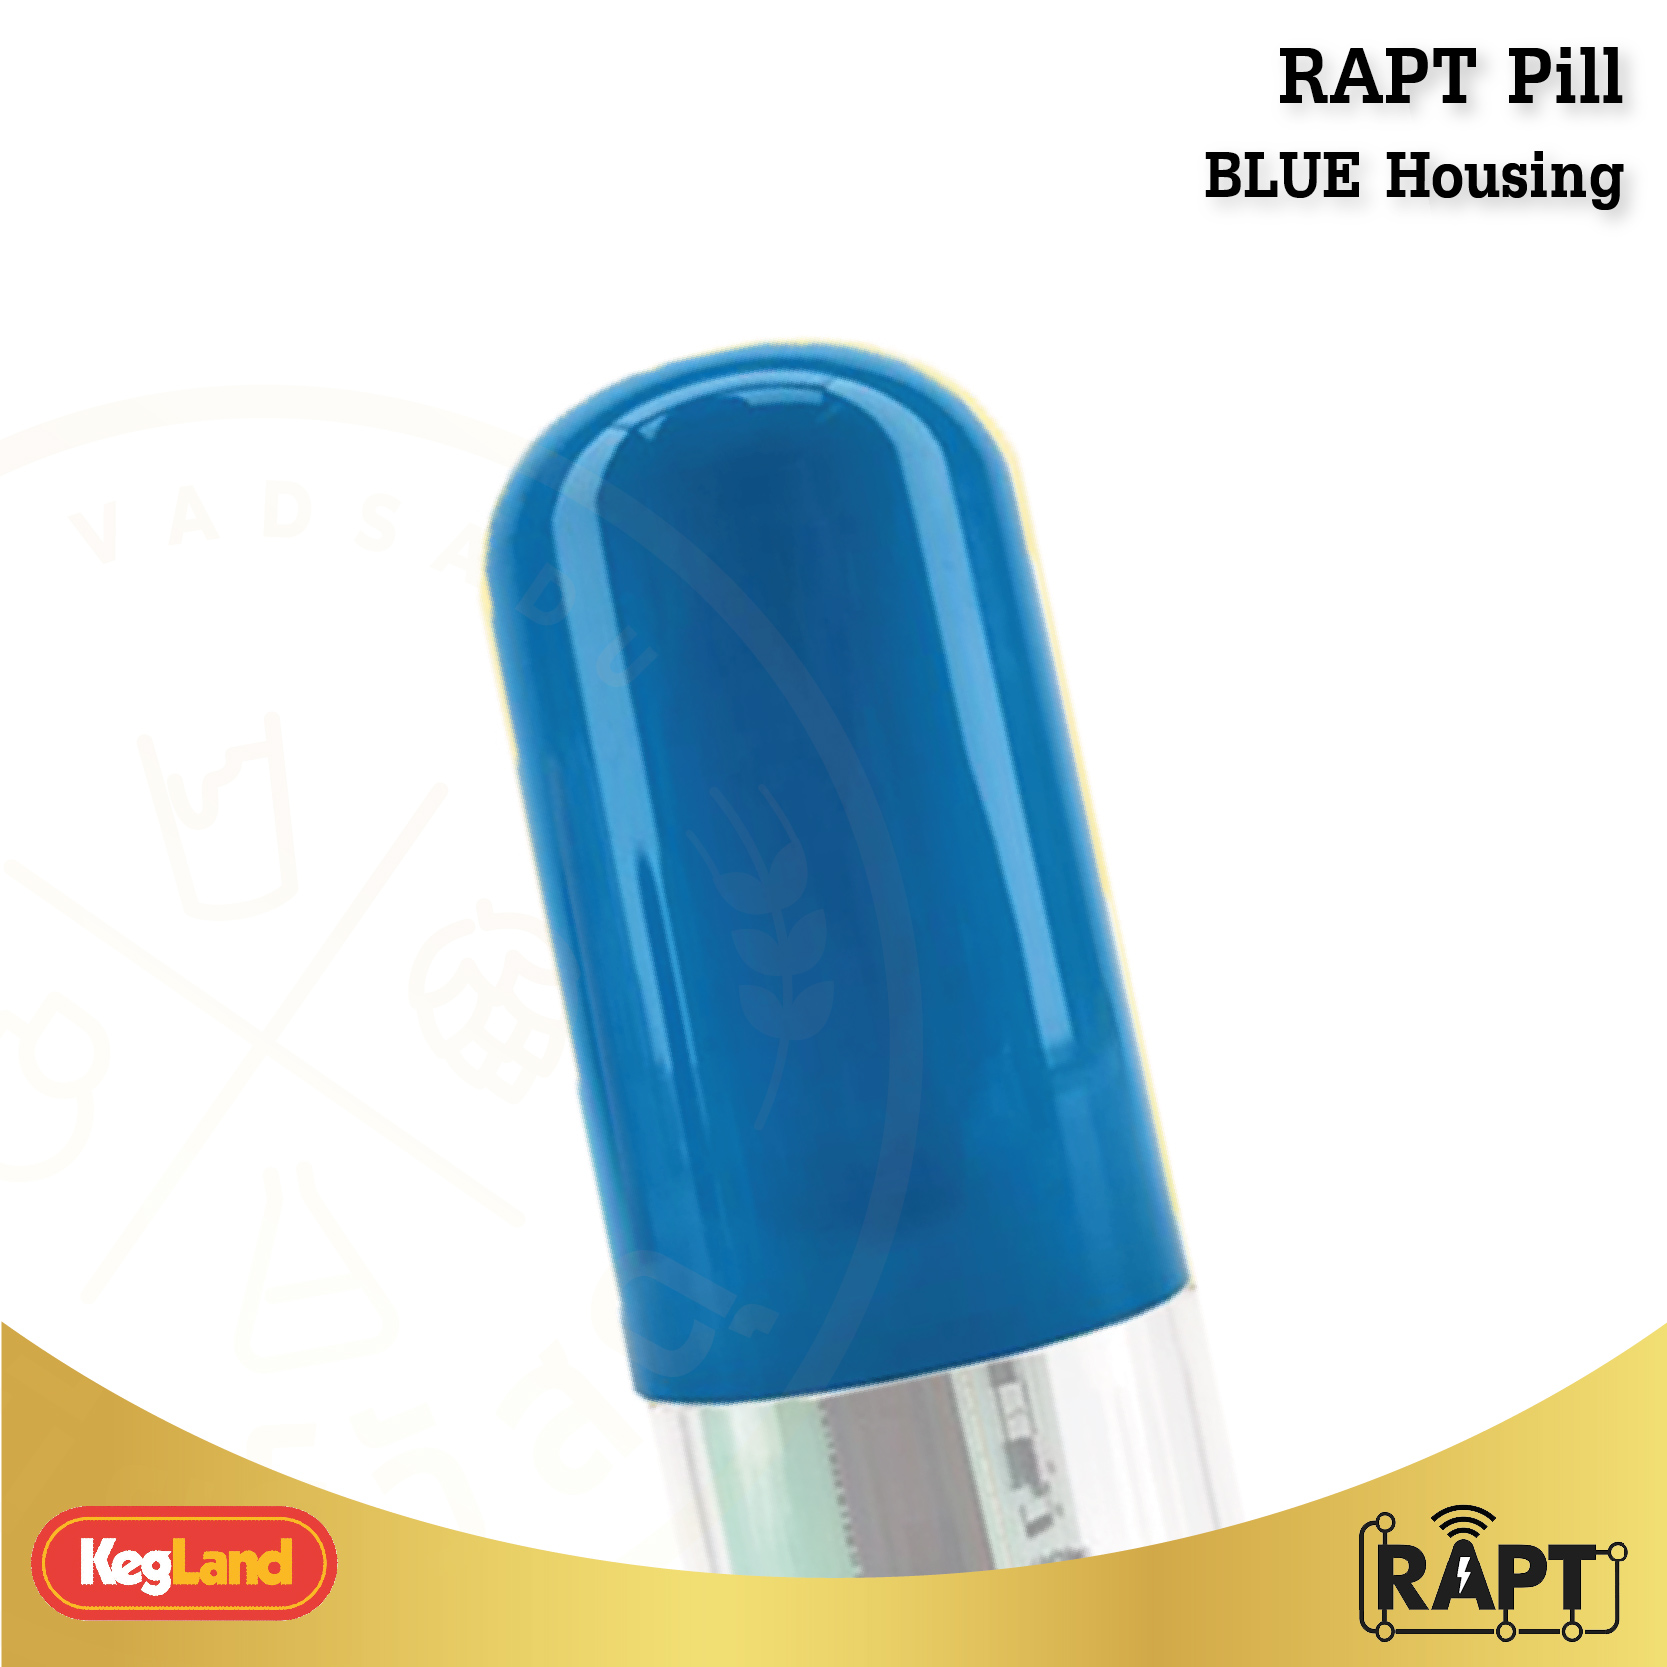 RAPT Pill - BLUE Housing (เฉพาะฝั่งสี)